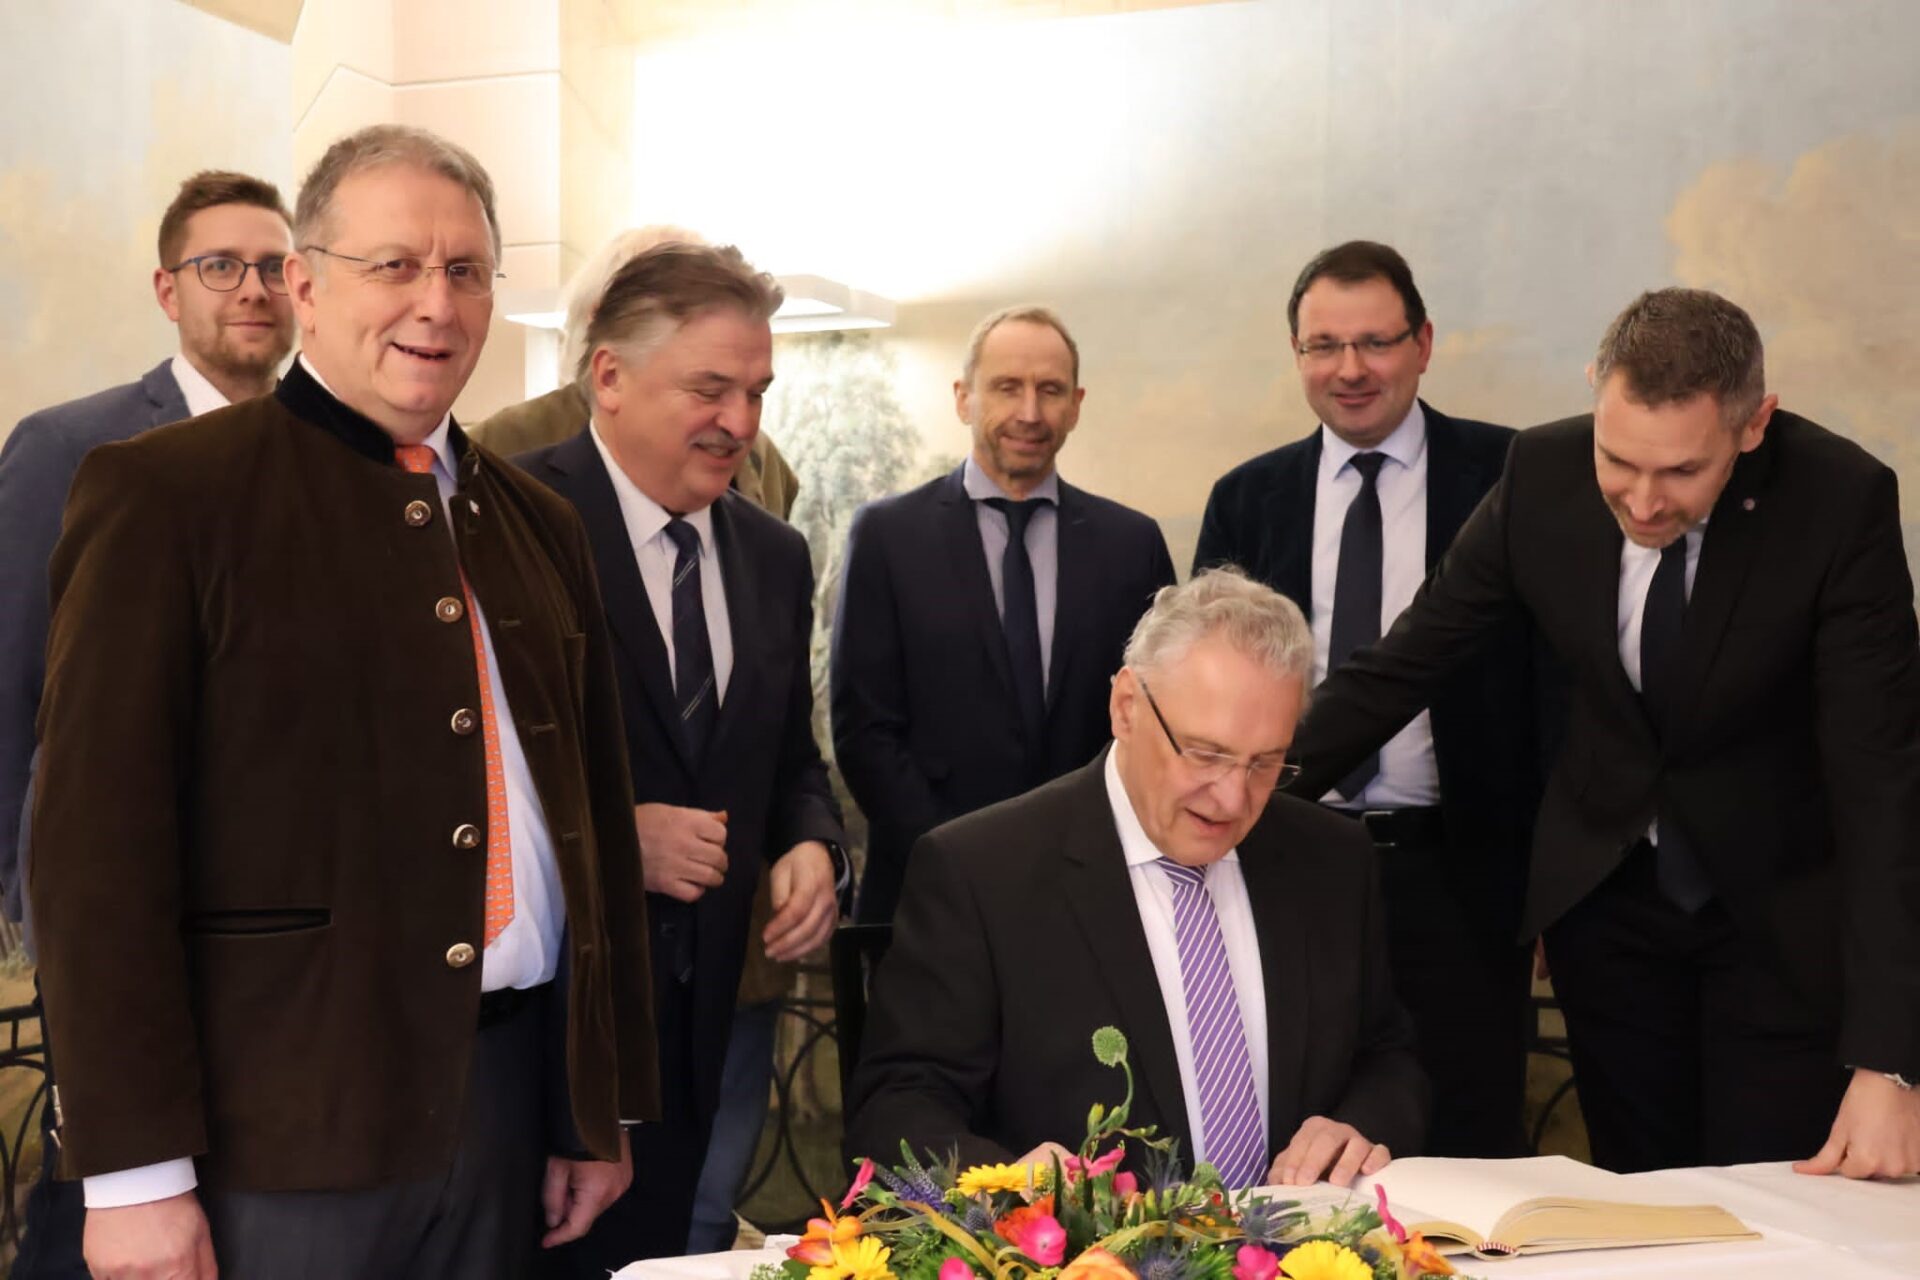 Staatsminister Joachim Herrmann informiert sich über Ausbaustand in Schloss Thurnau